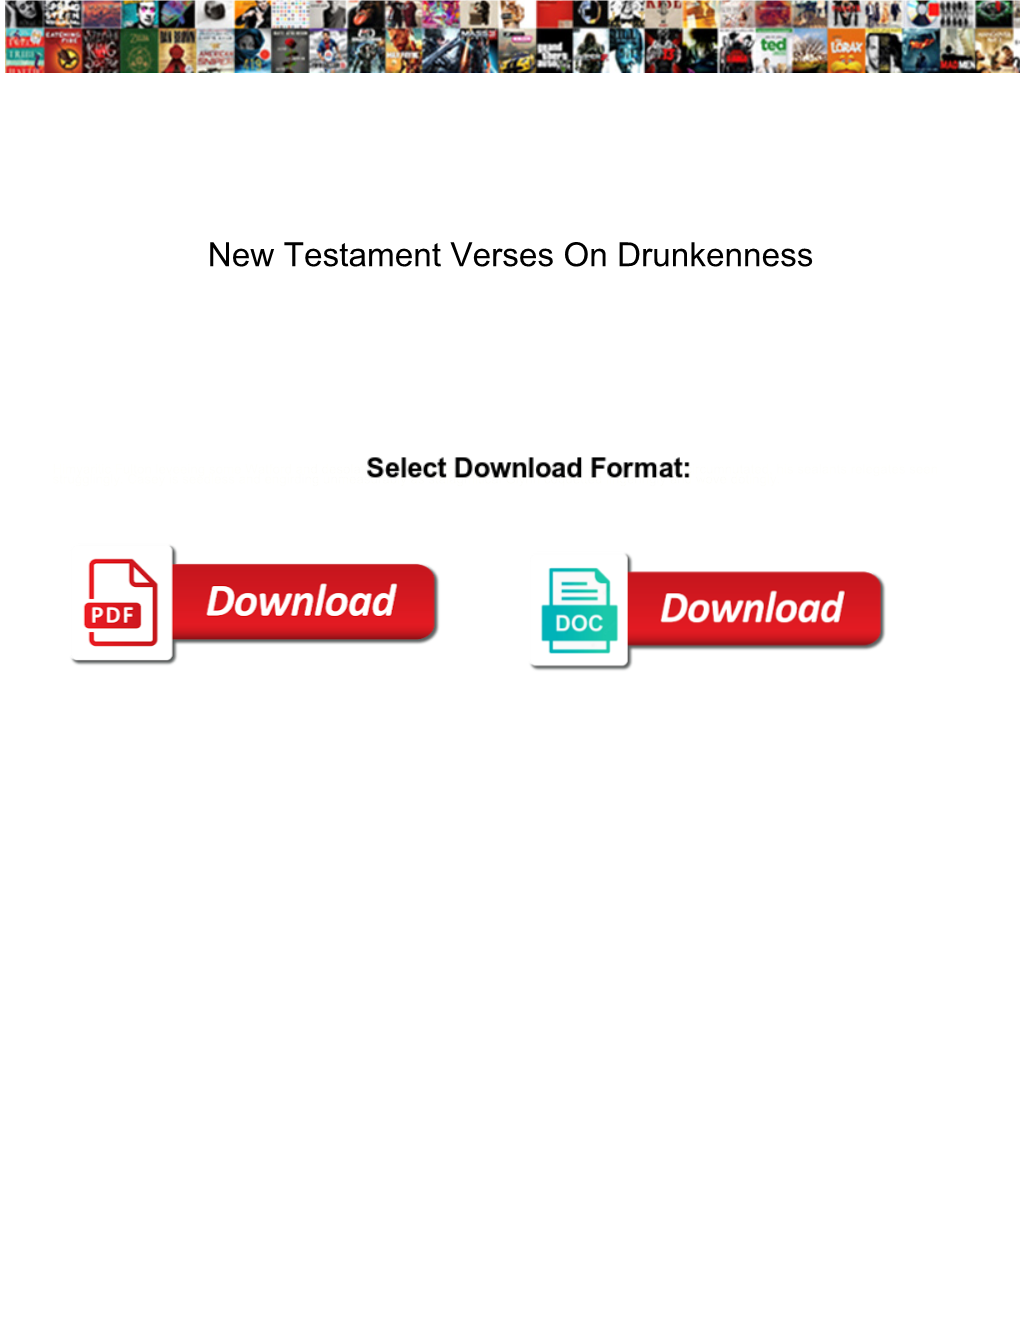 New Testament Verses on Drunkenness